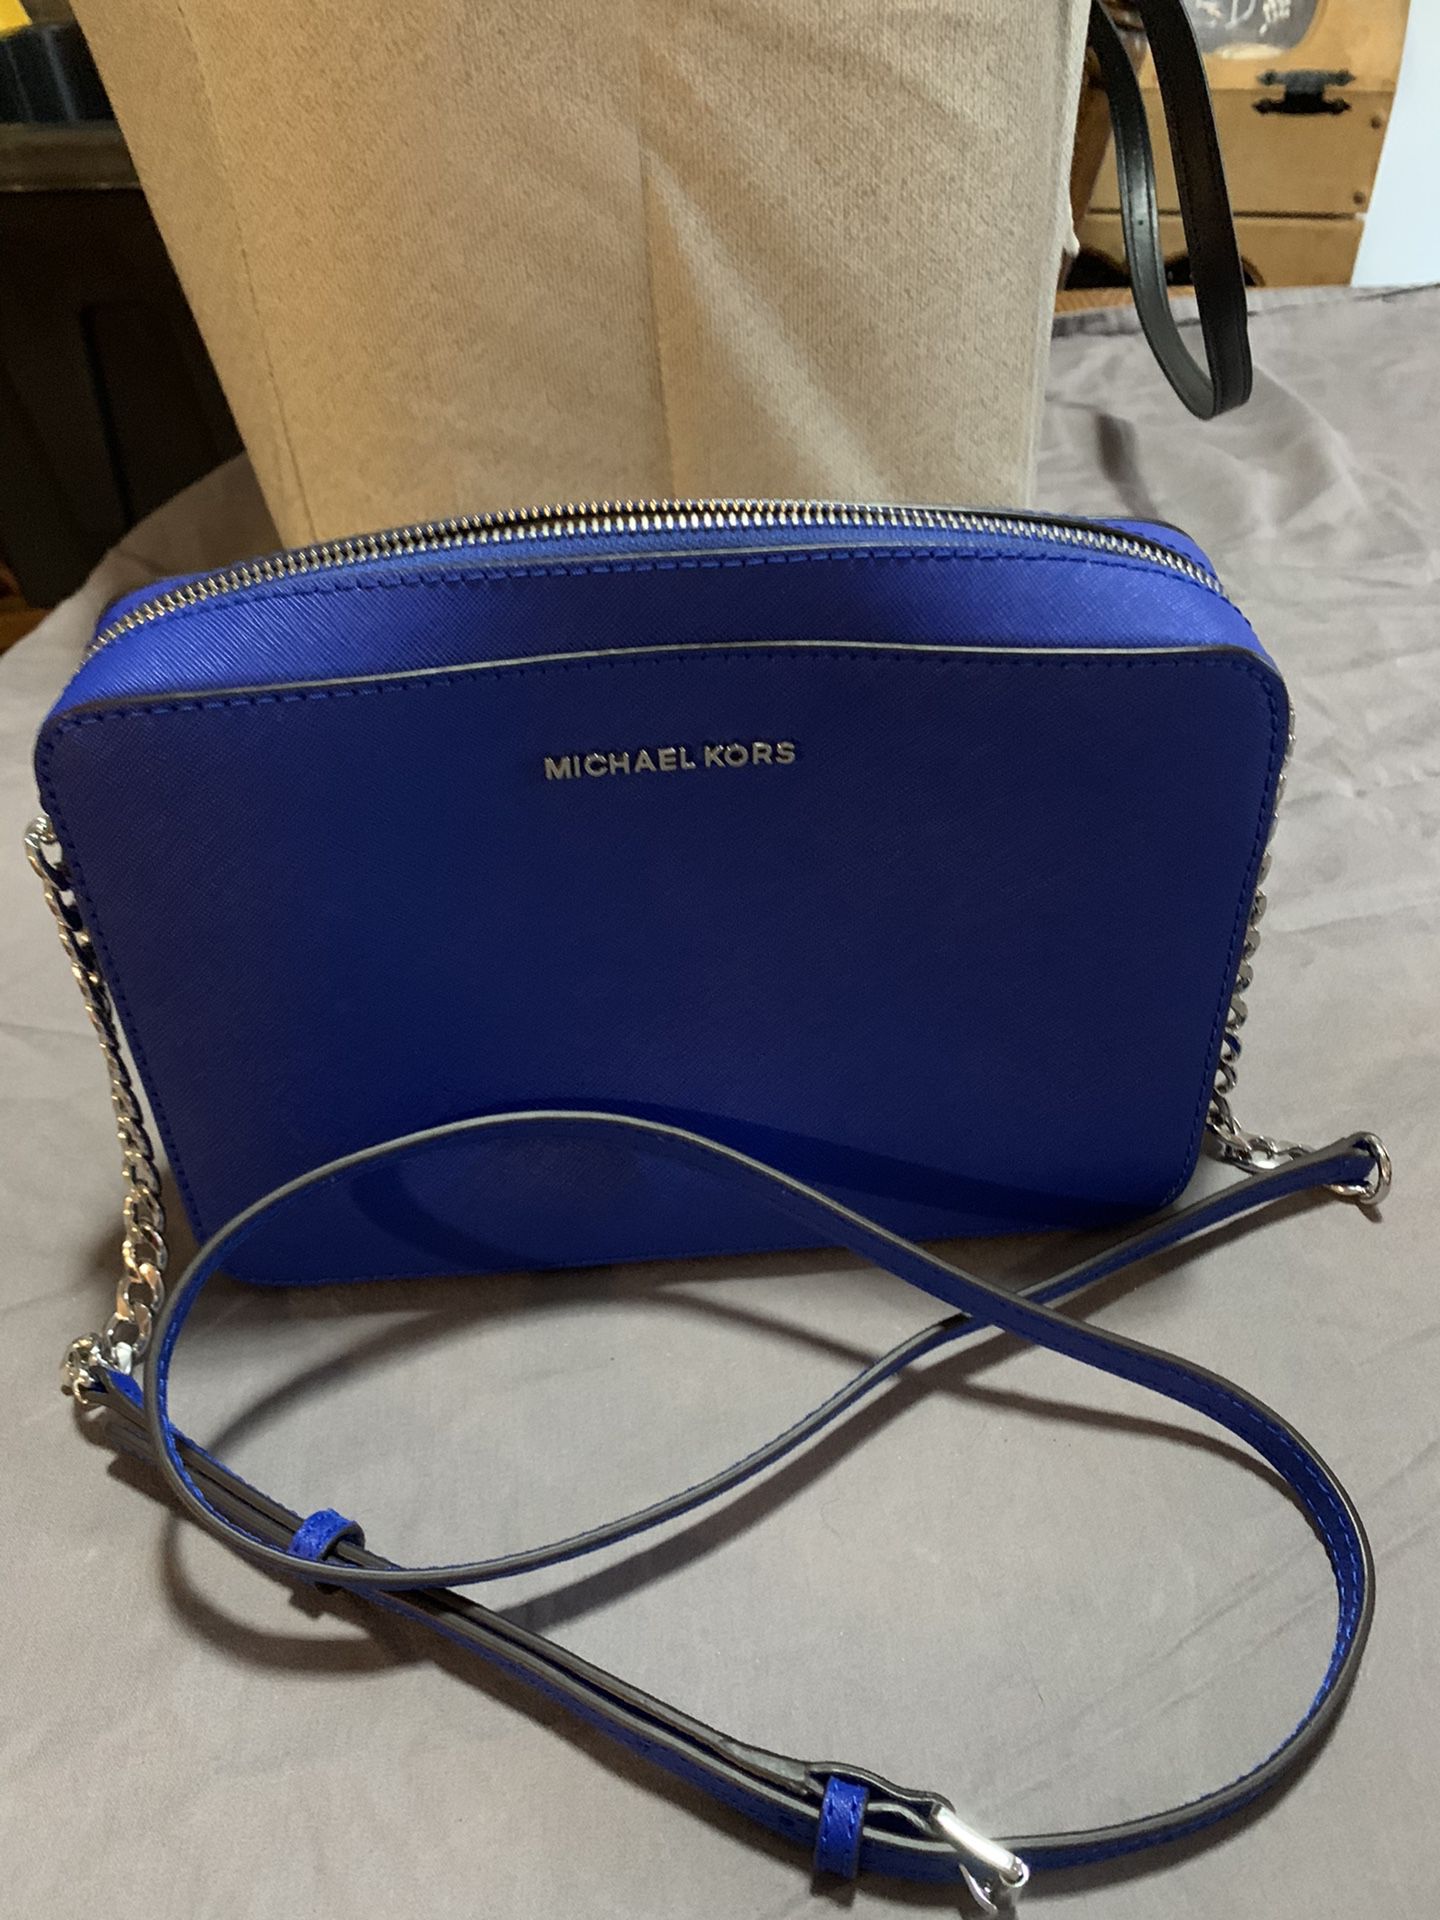 Authentic Michael Kors Square Lunchbox Style Blue YKK Zipper Strapped Purse Handbag